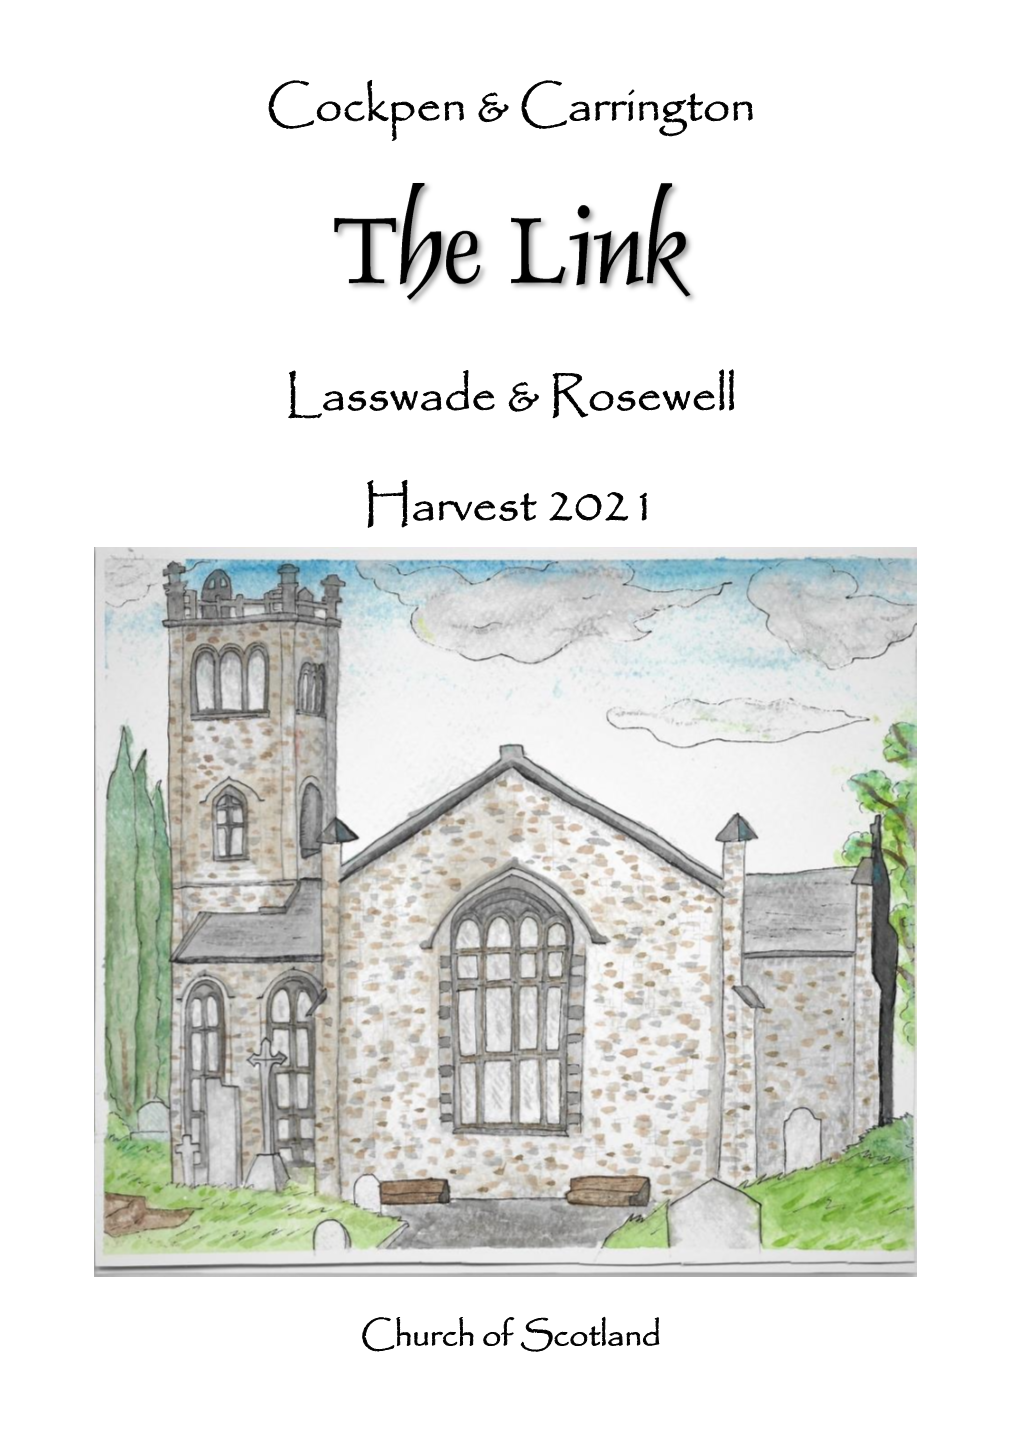 Cockpen & Carrington Lasswade & Rosewell Harvest 2021